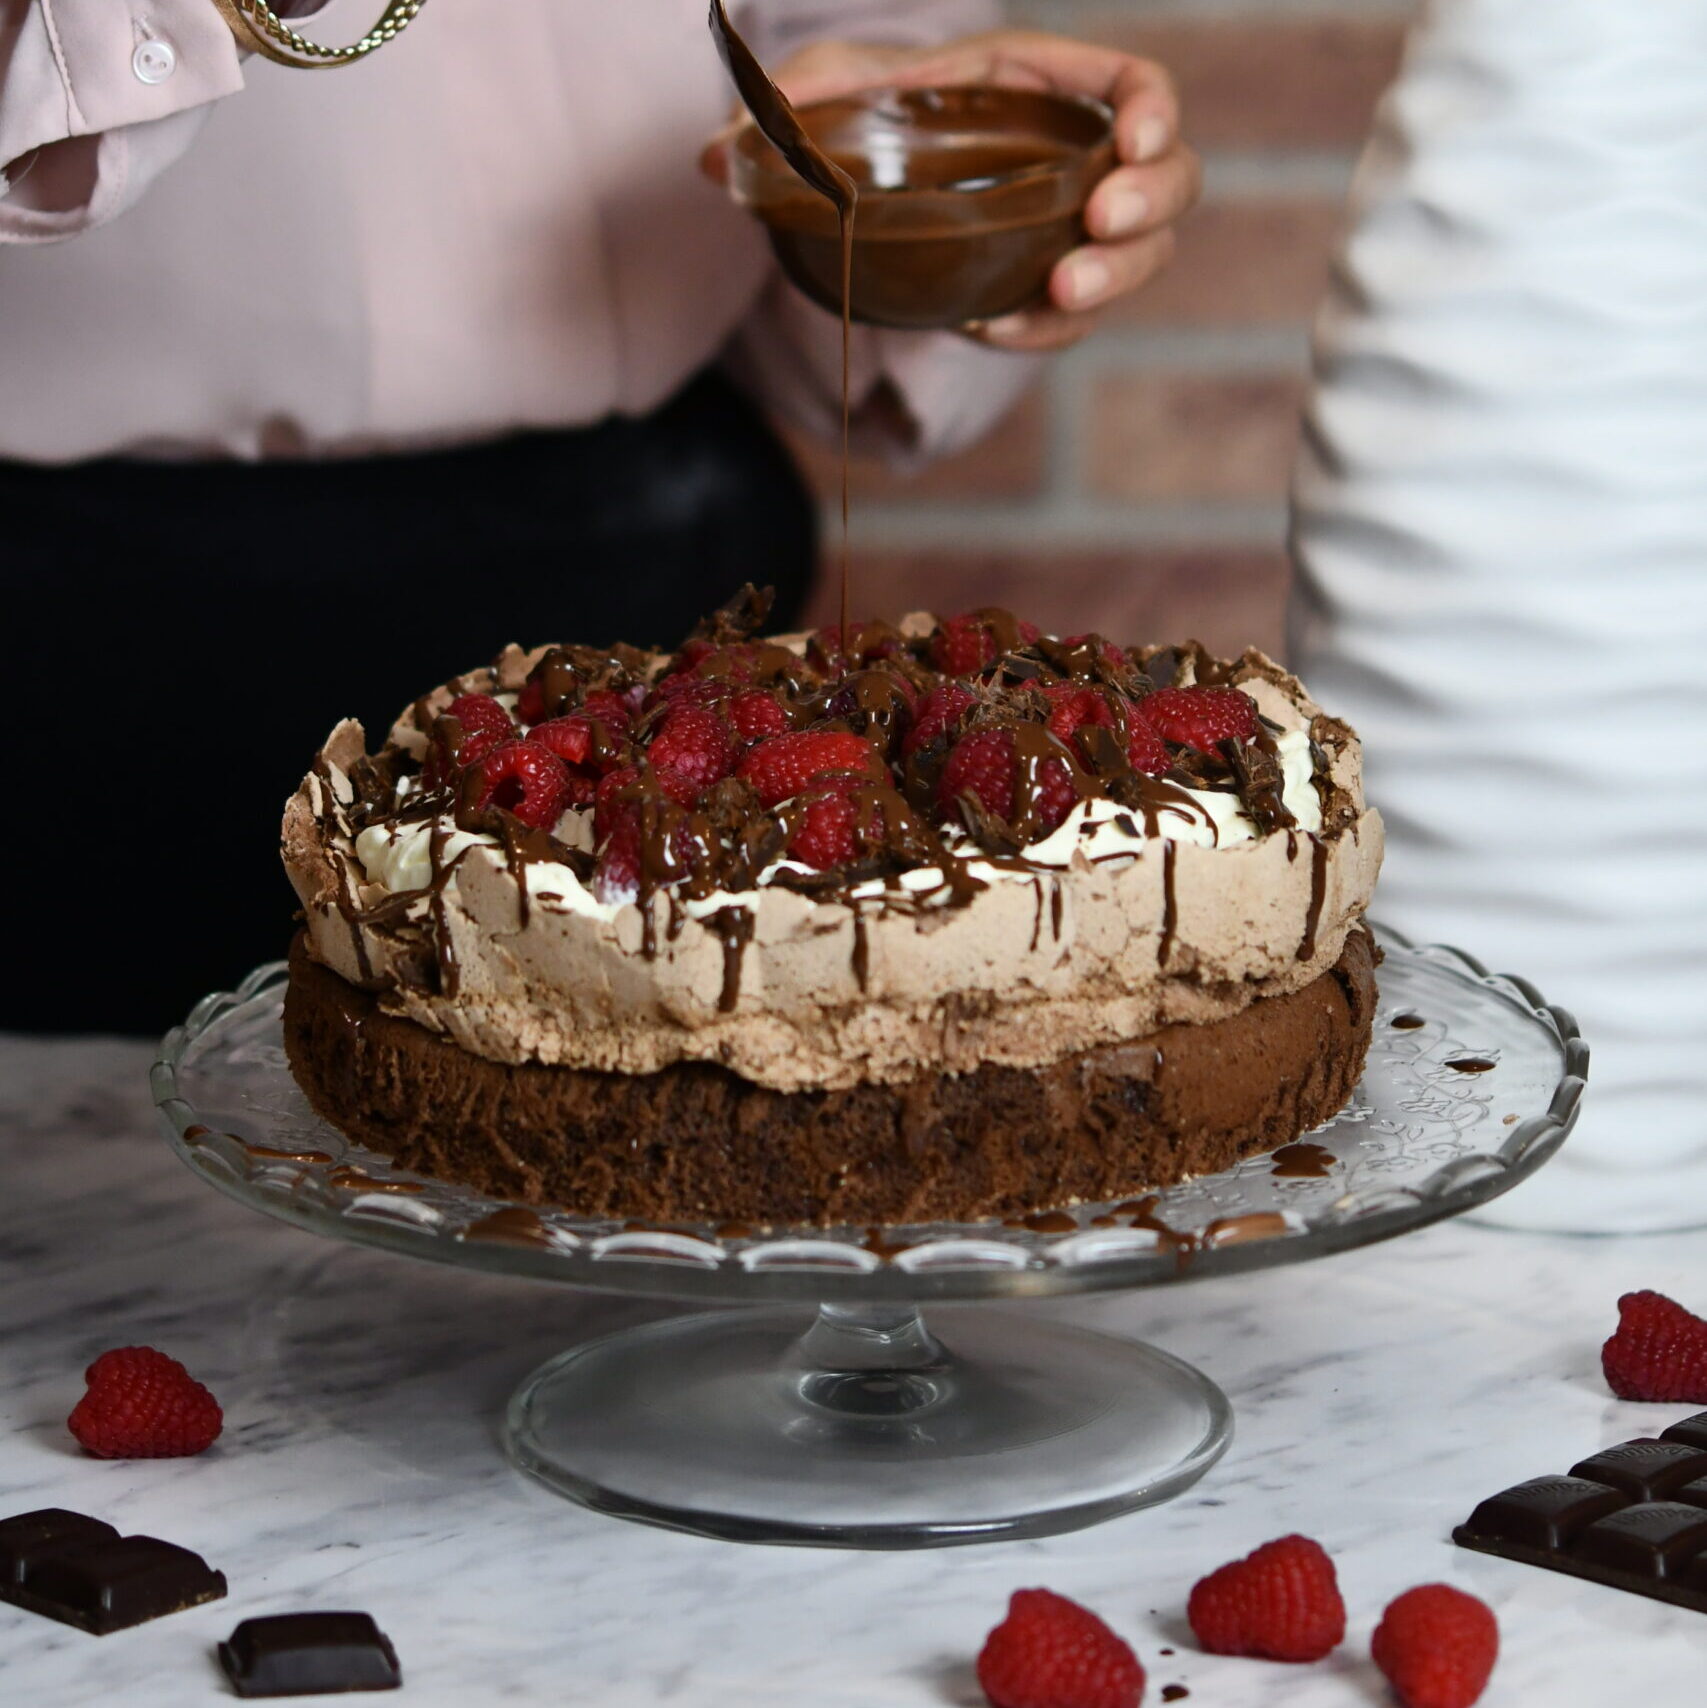 Chocolate Meringue Cake with Cream and Raspberries | Klysa